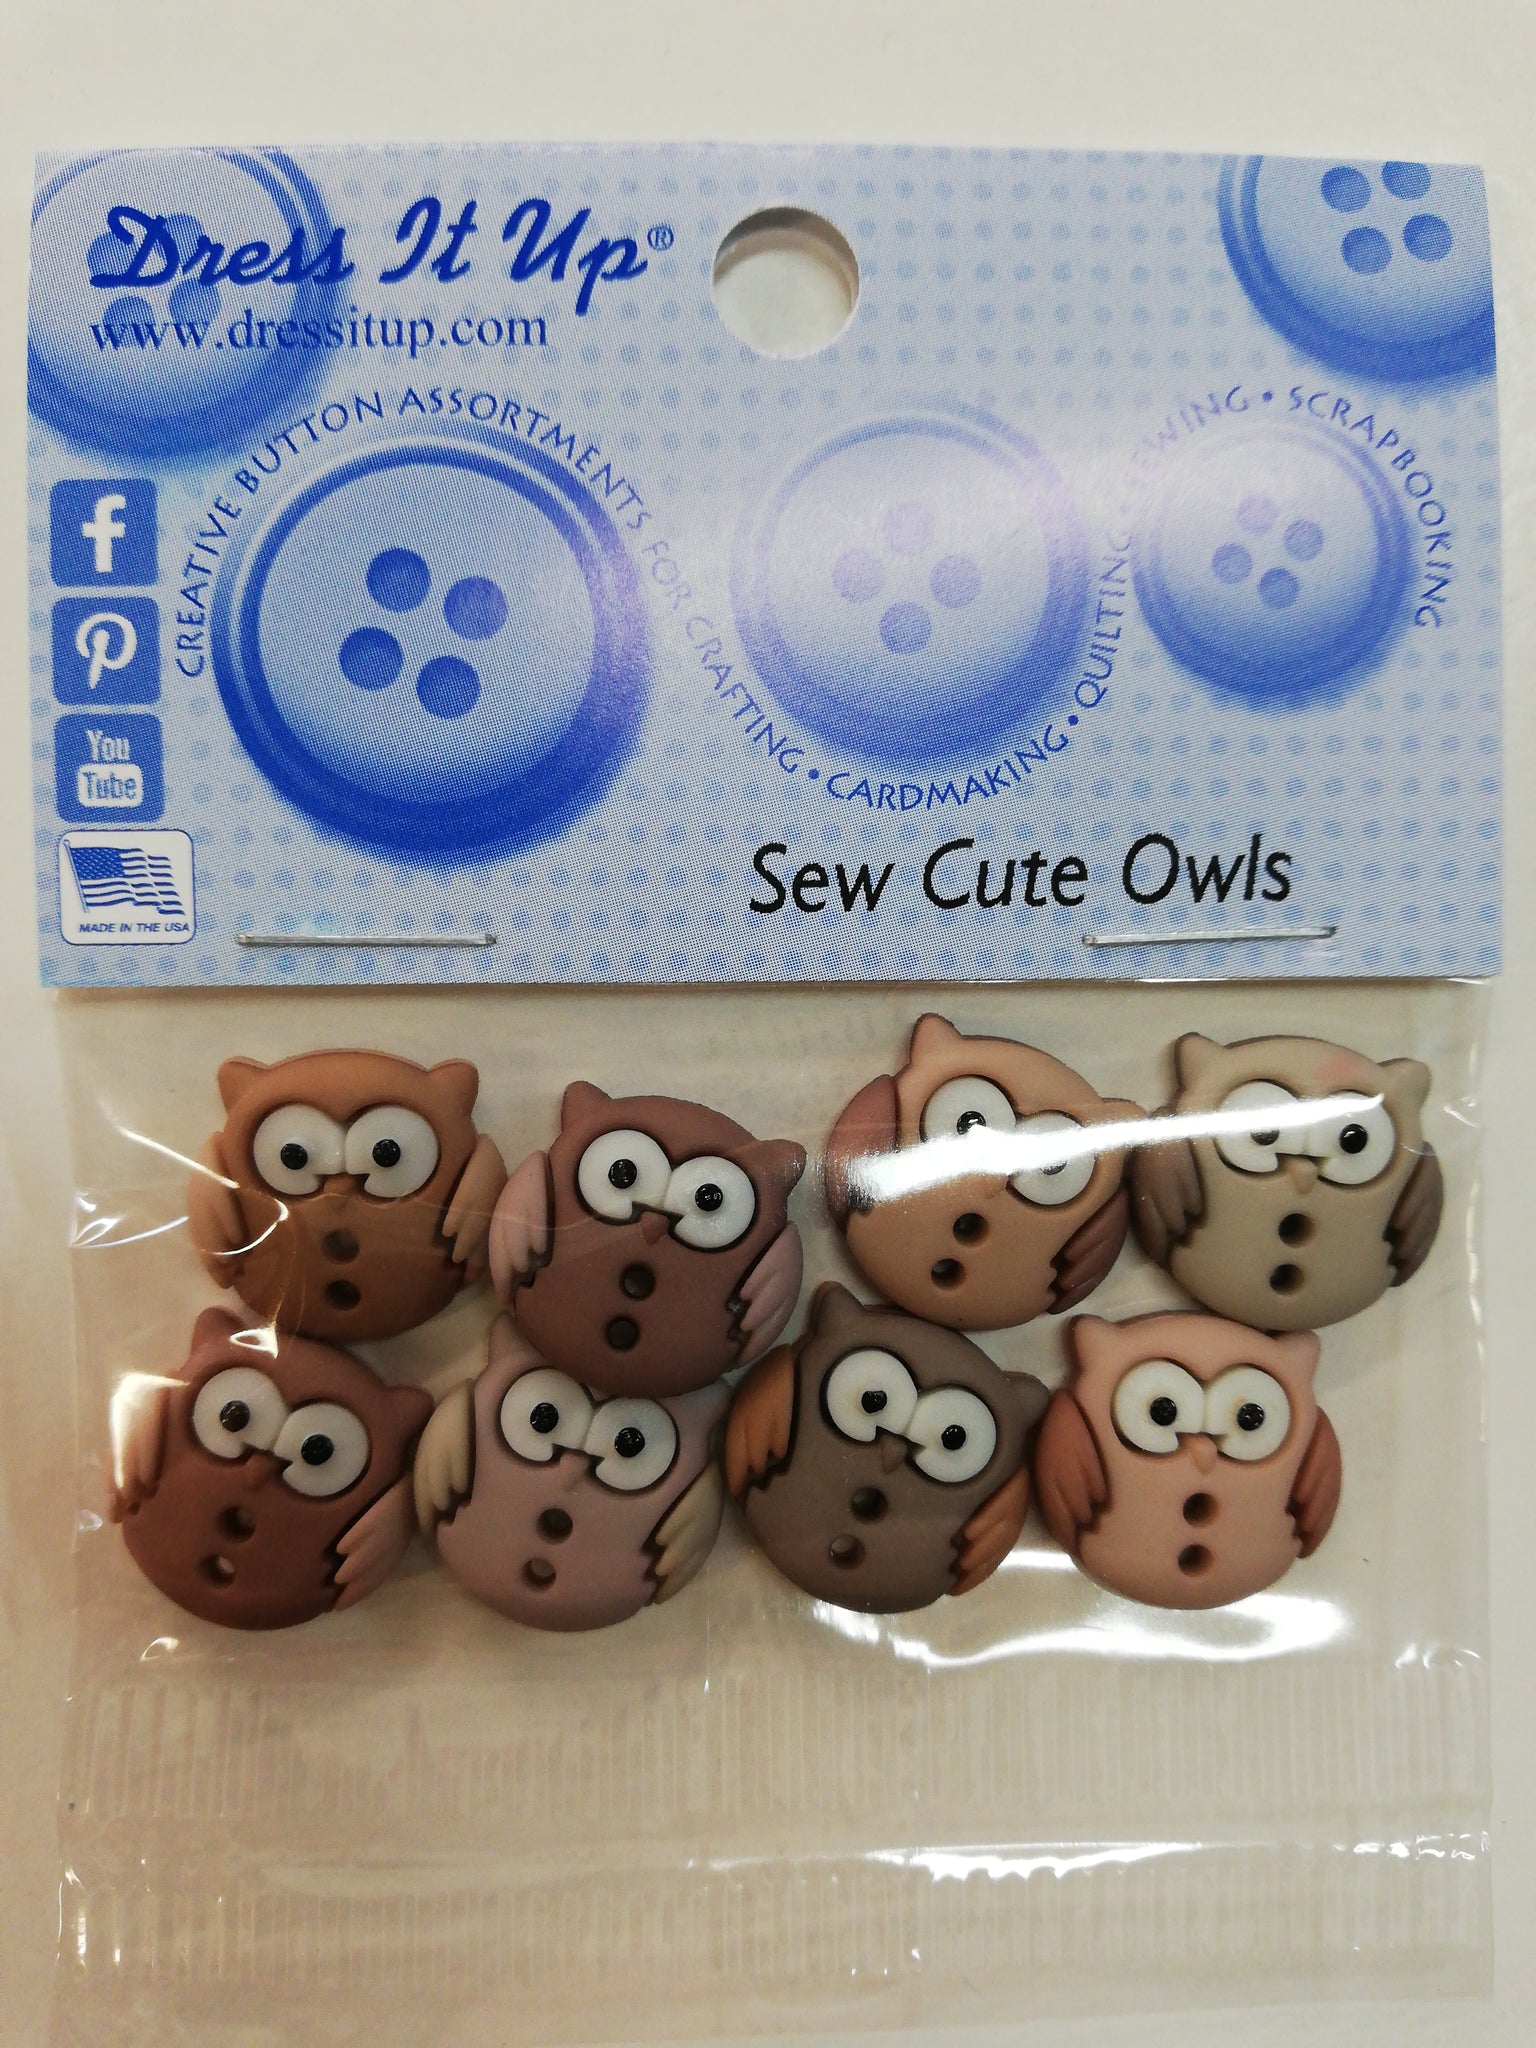 Sew Cute Owls buttons